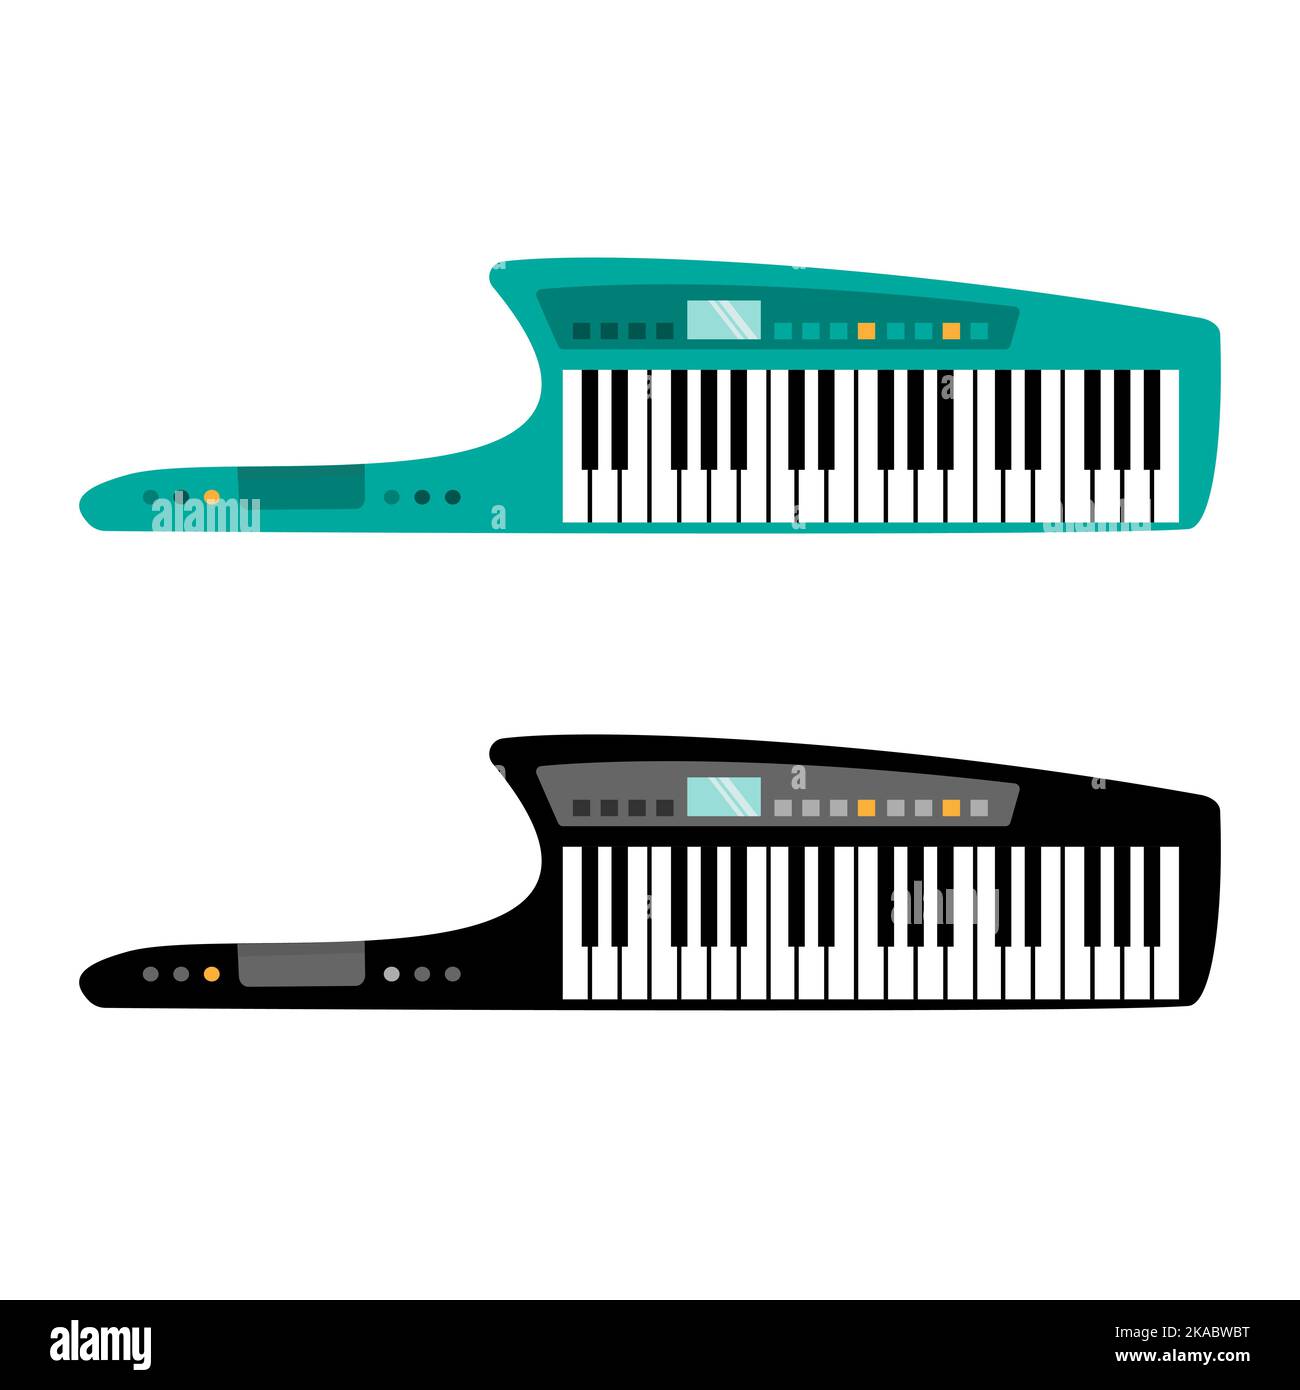 Keytar vector illustration. Portable synthesizer. Stock Vector